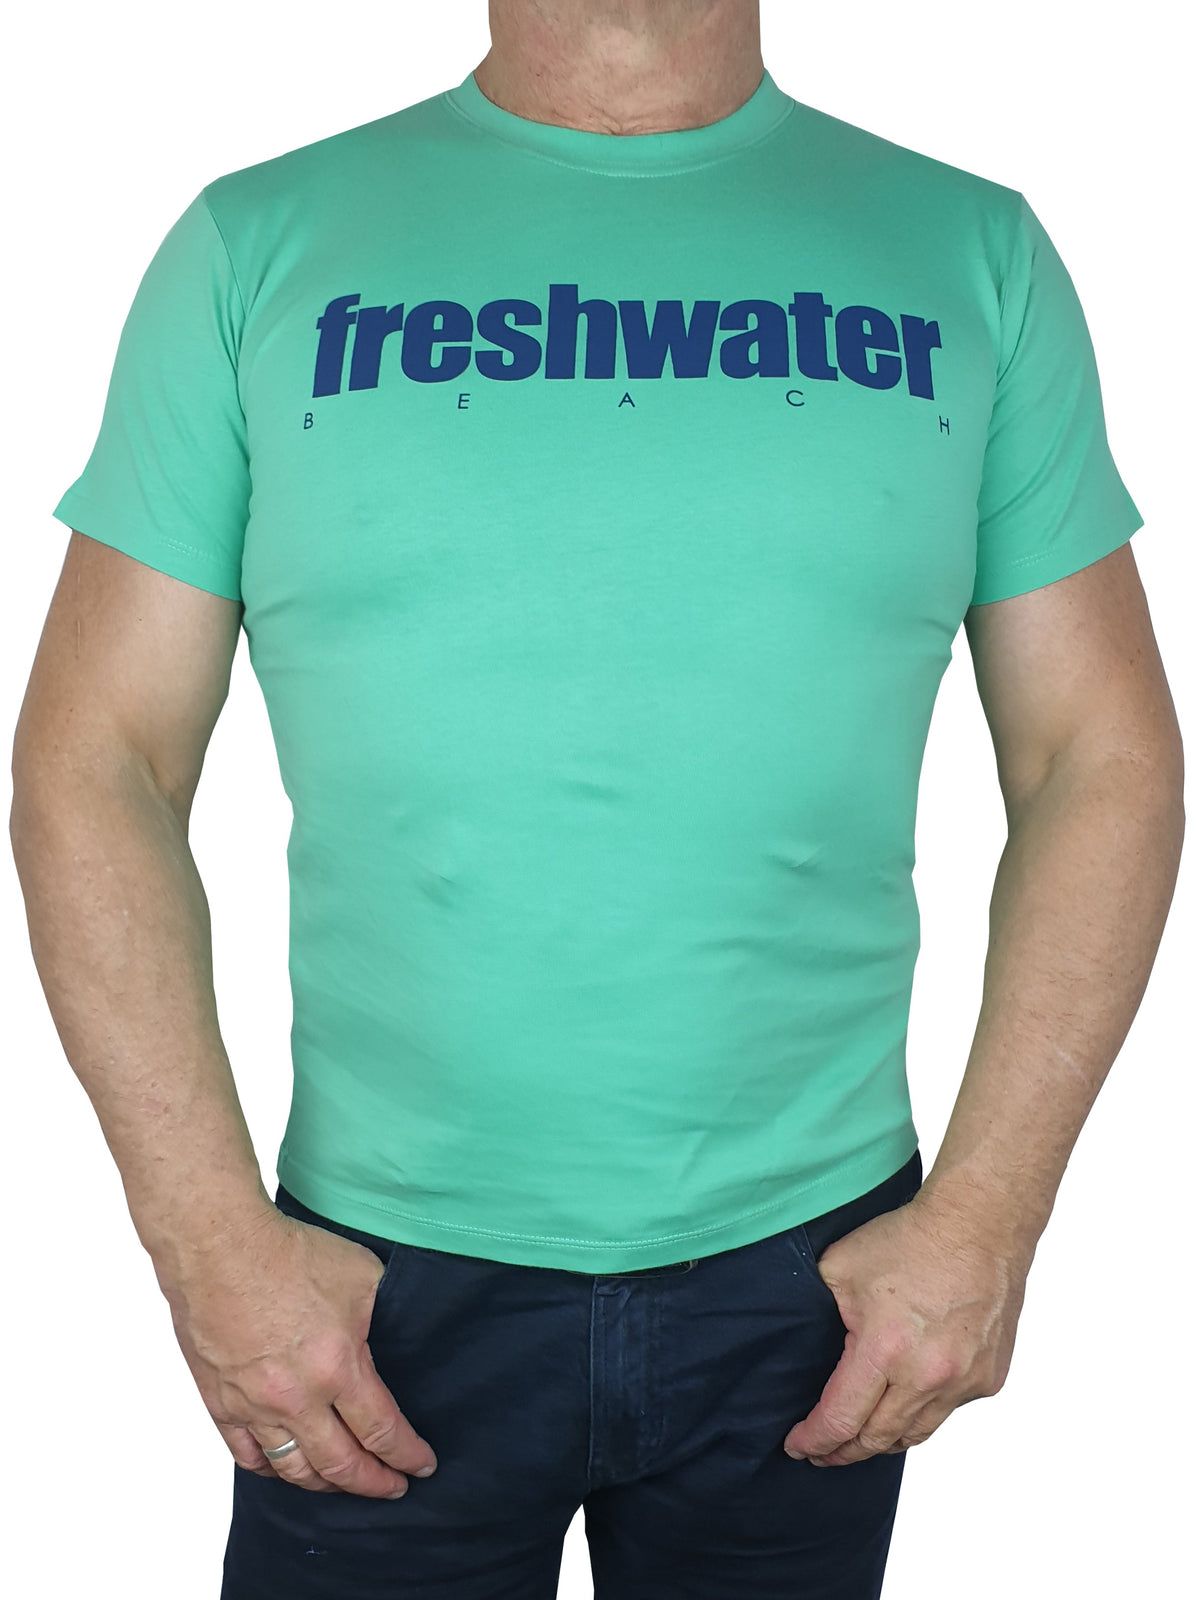 Freshwater Green Printed T-Shirt